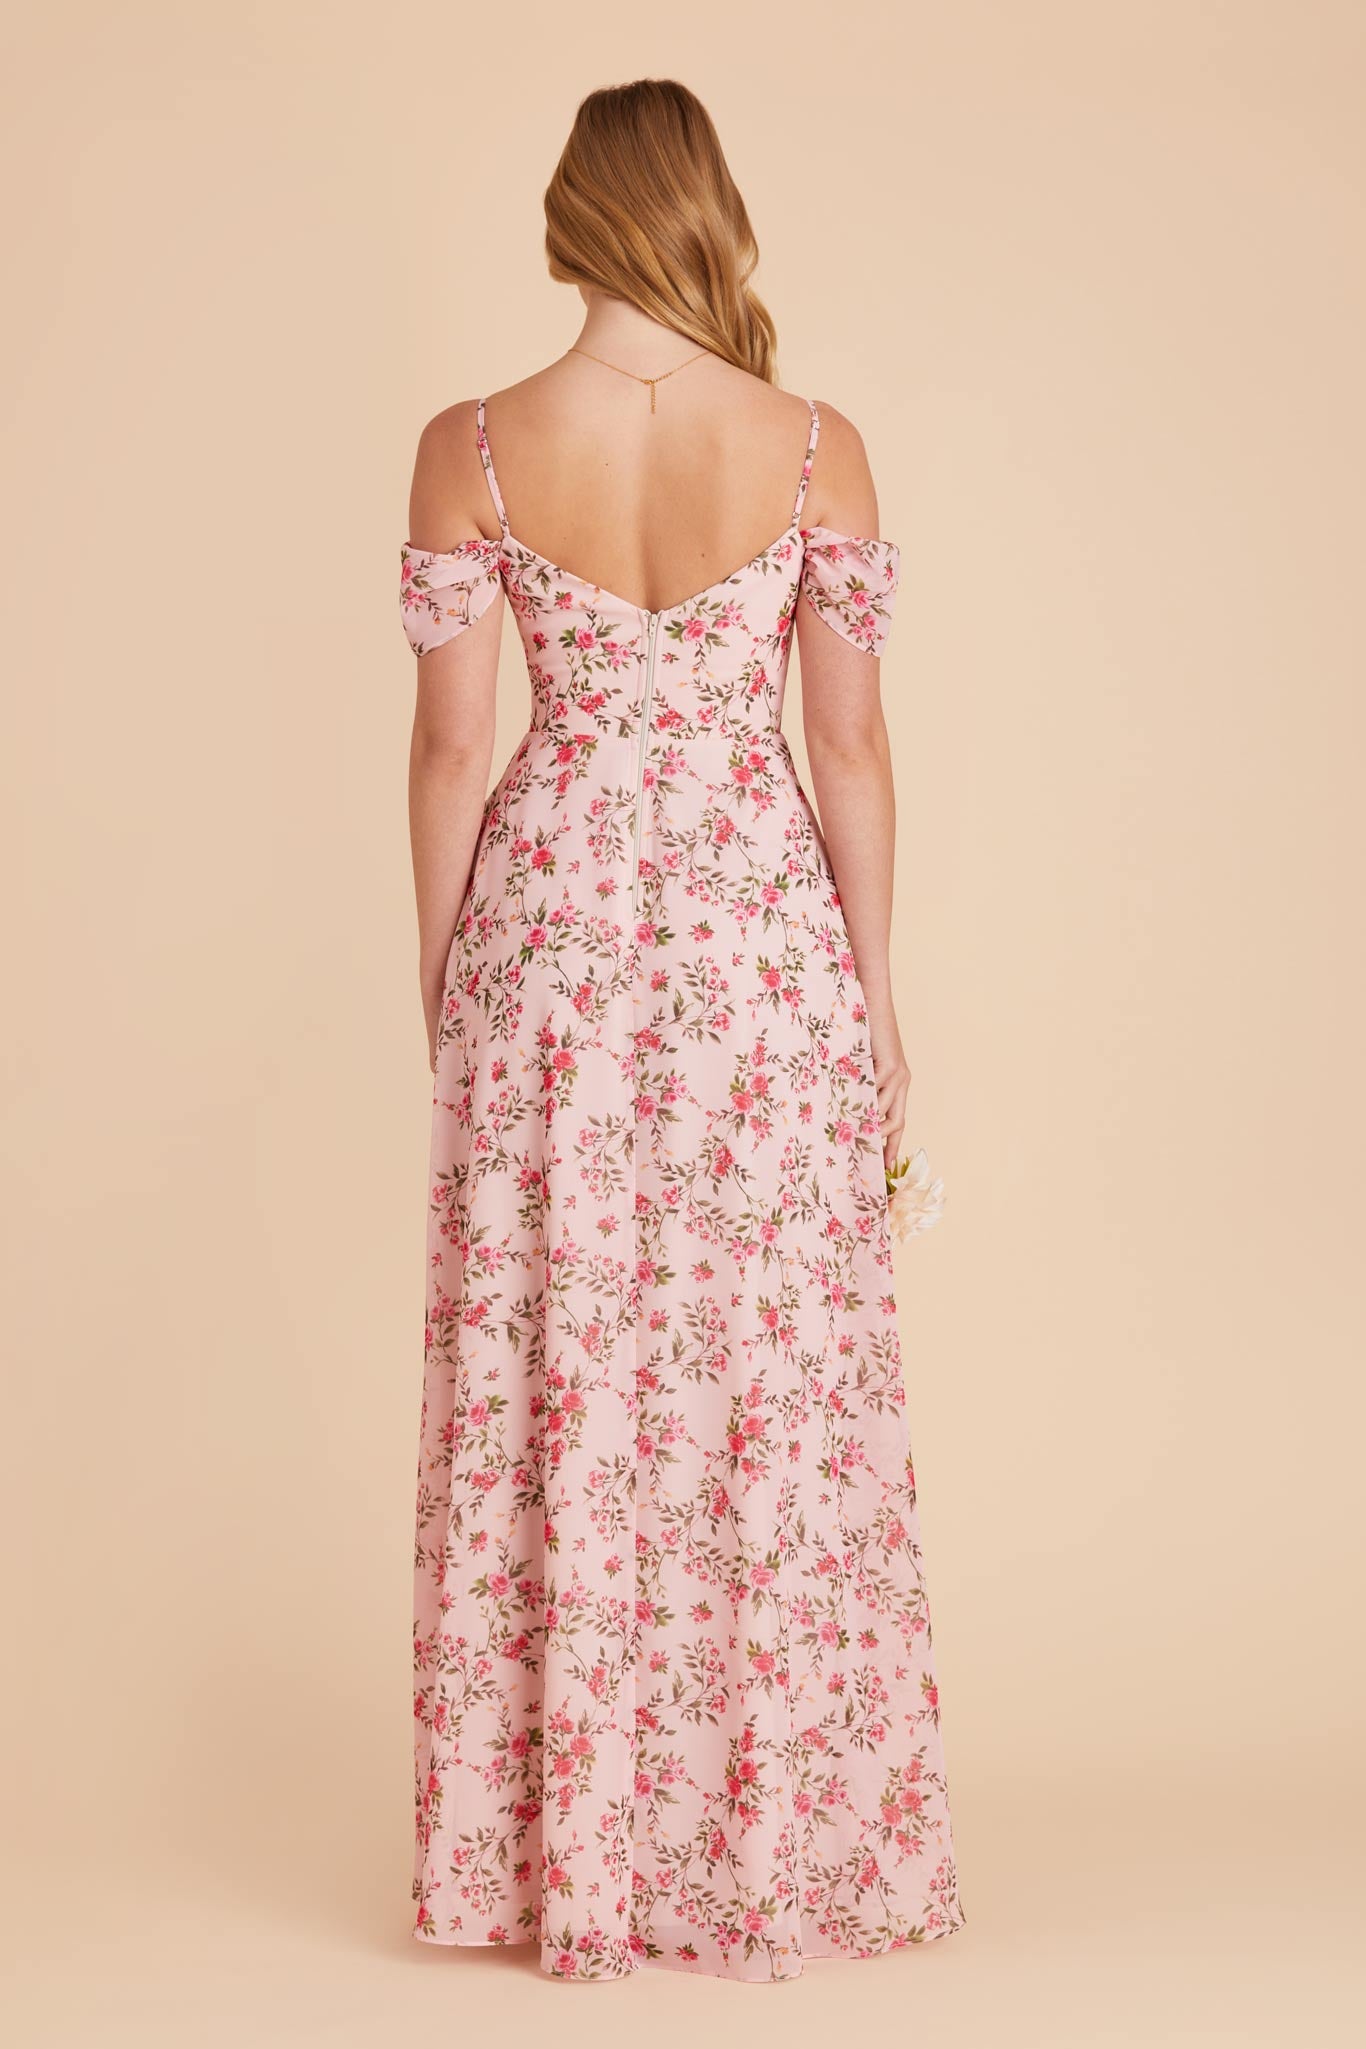 Devin Convertible Chiffon Bridesmaid Dress in Wild Rose Garden